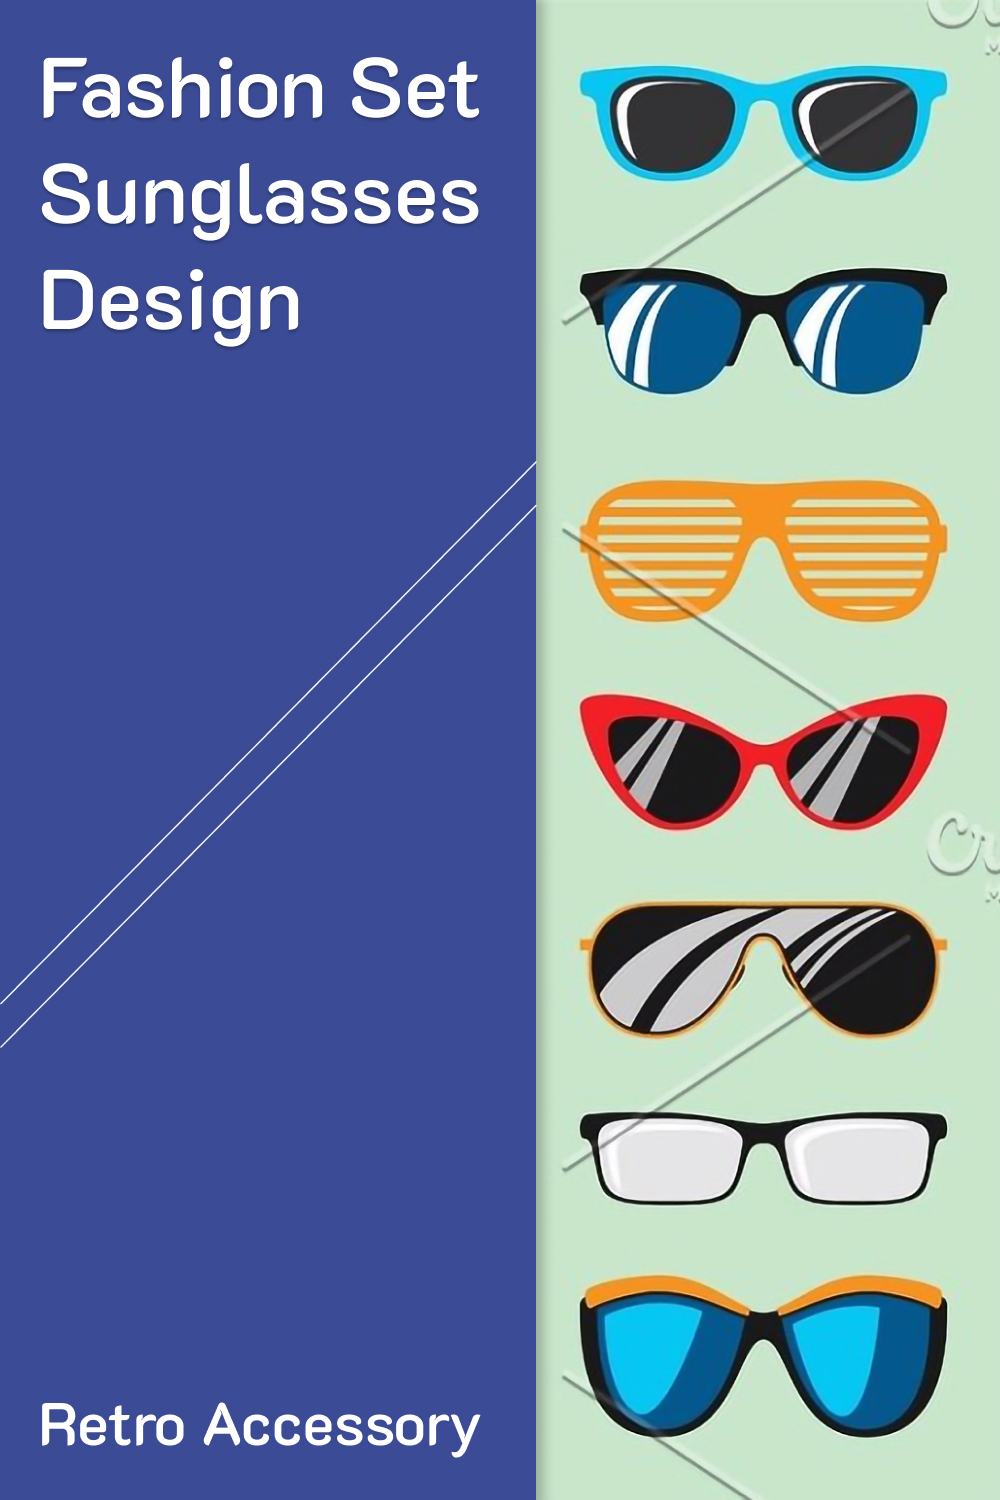 Illustrations fashion set sunglasses design retro accessory of pinterest.